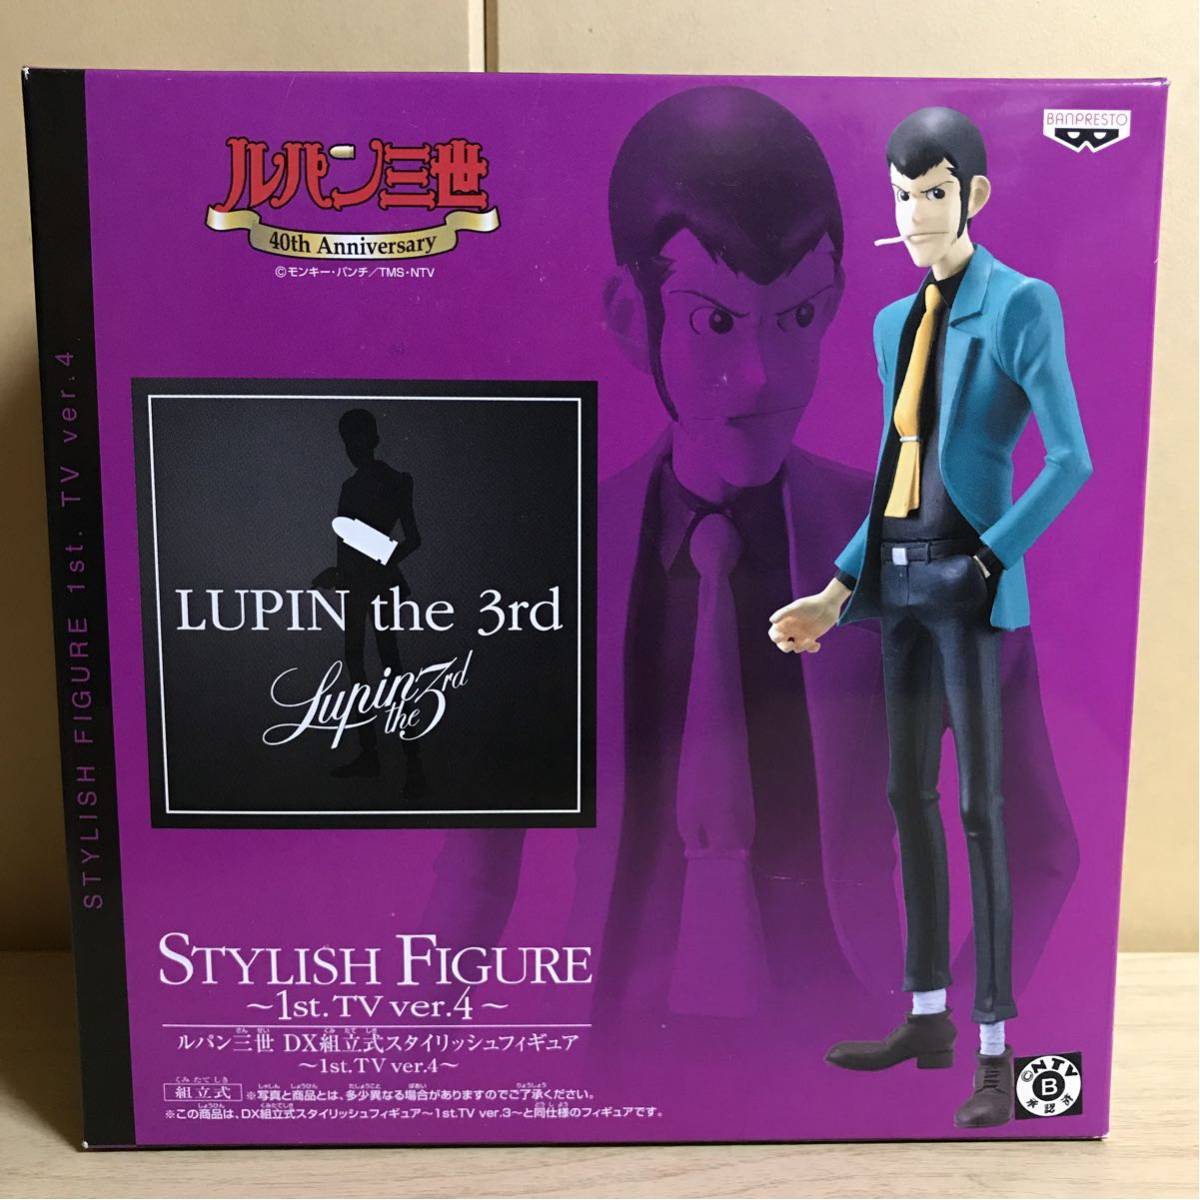 * Lupin III DX сборка тип стильный фигурка ~1st. TV ver.4~ Lupin * sen форма * не 2 .* все 3 вид 